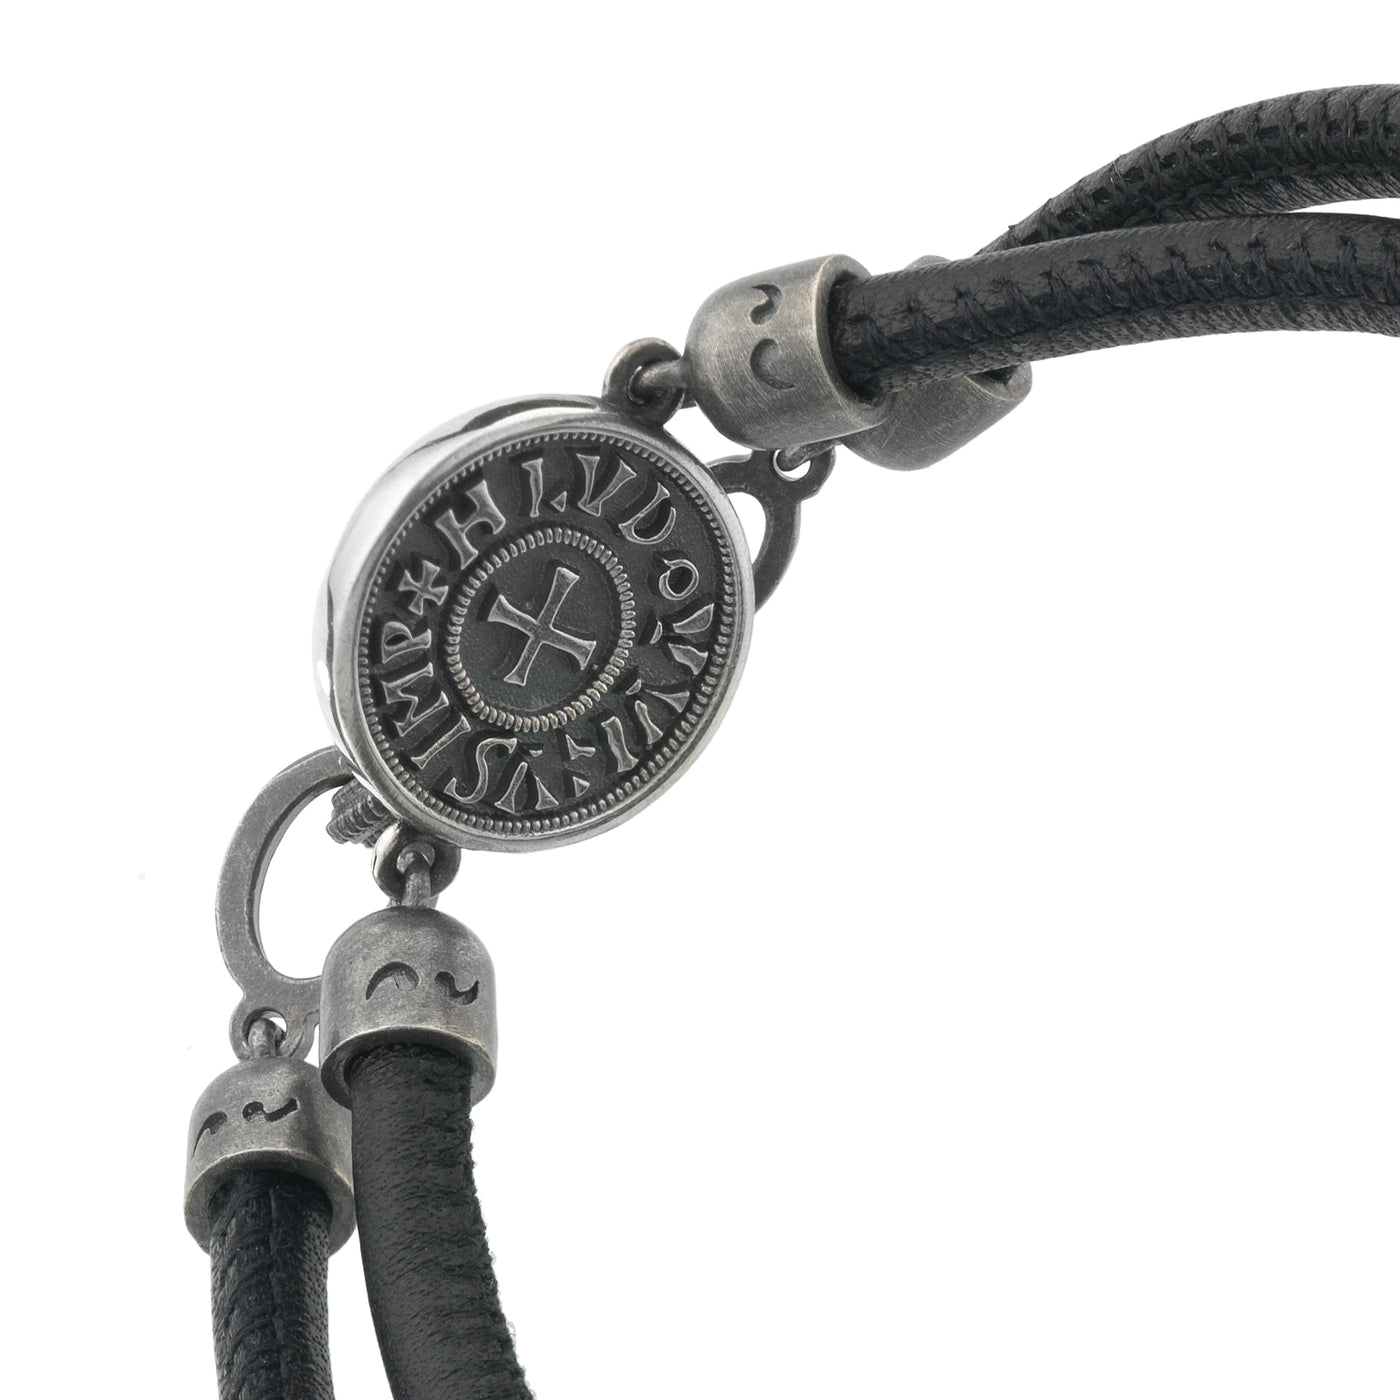 MONETA Oxidized and Polished Silver Bracelet with black leather